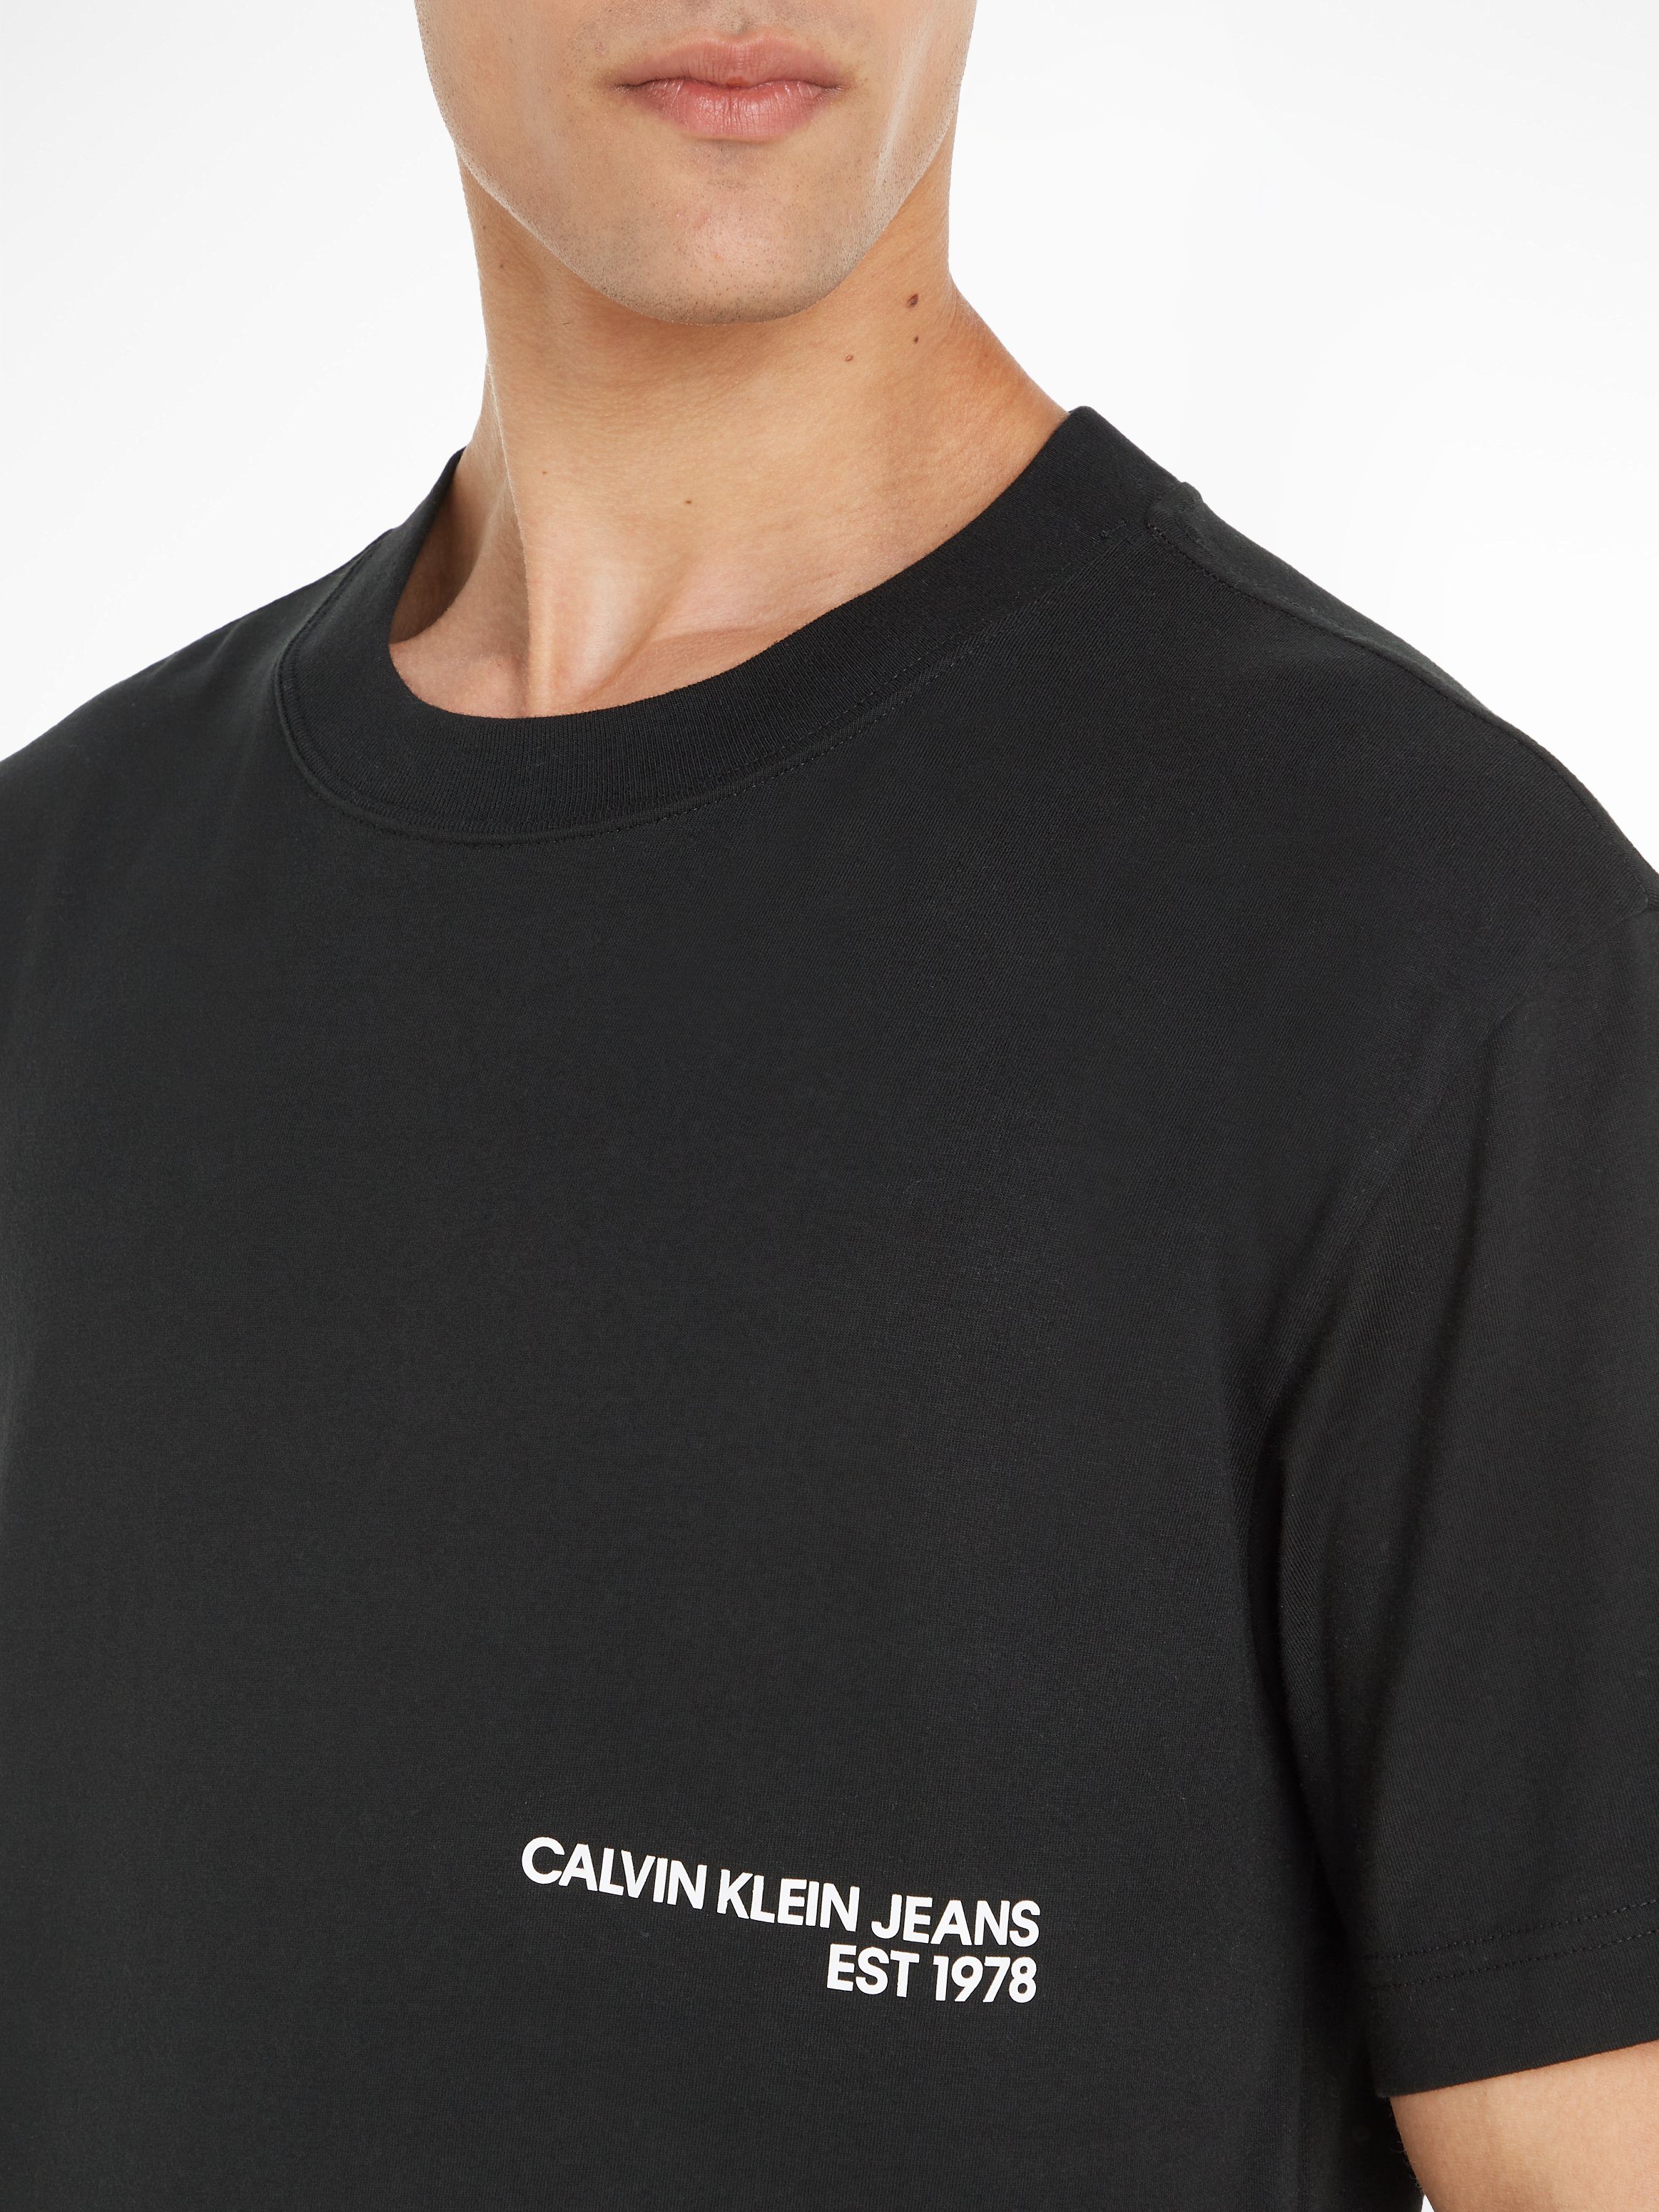 TEE Black CK Jeans Calvin Klein Ck SPRAY T-Shirt